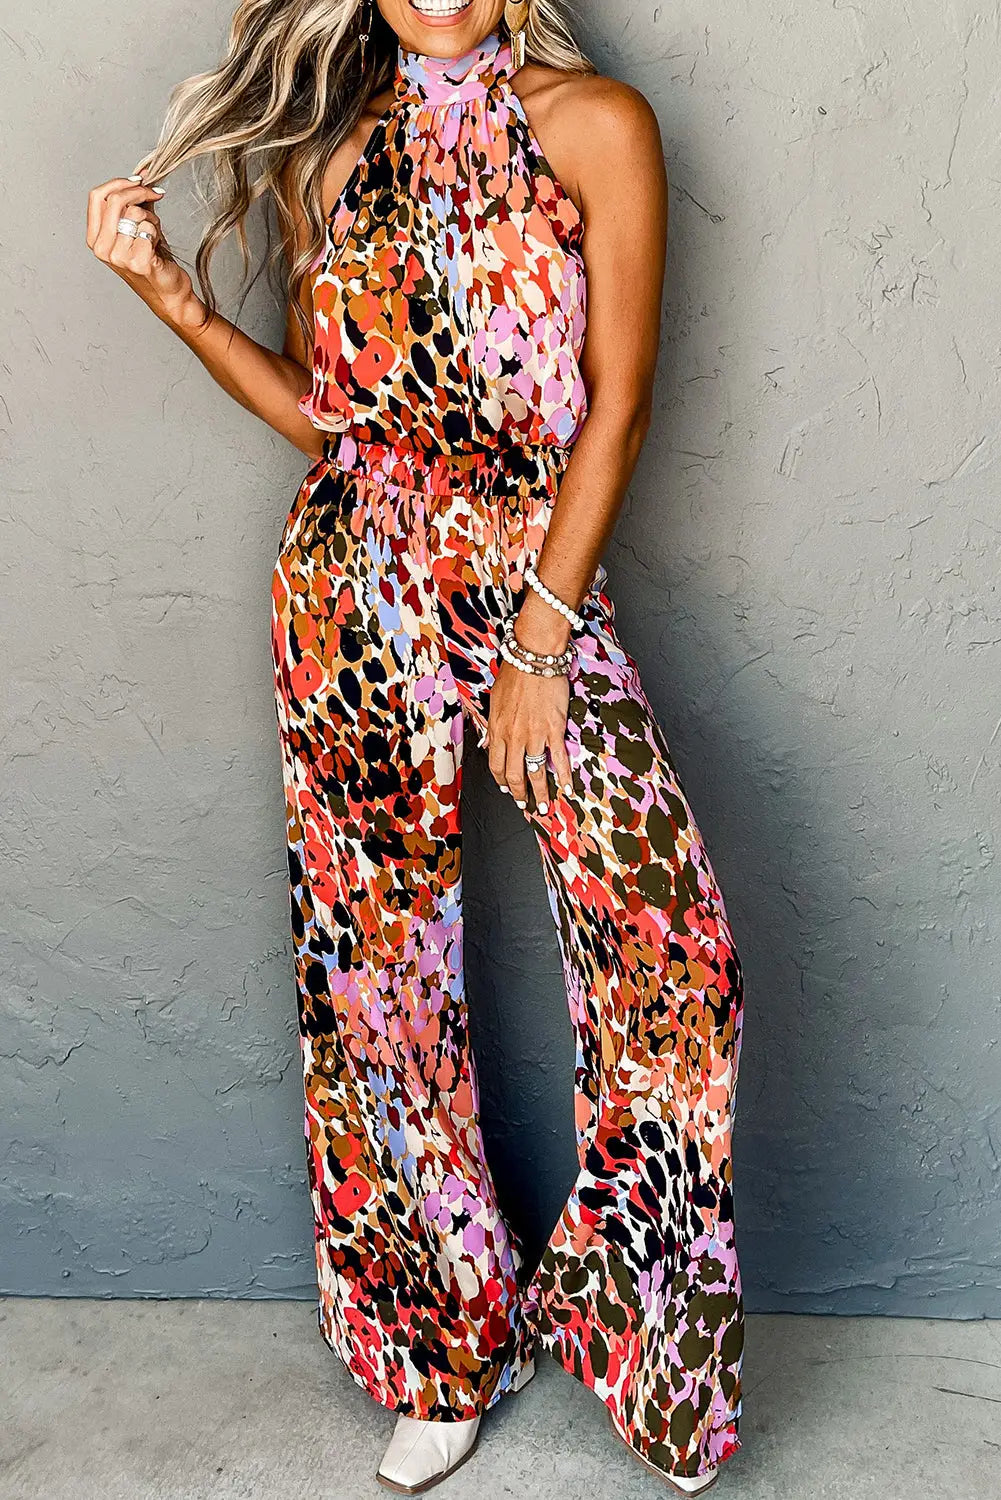 Black multicolor leopard print halter tank top and pants set - l / 100% polyester - sets